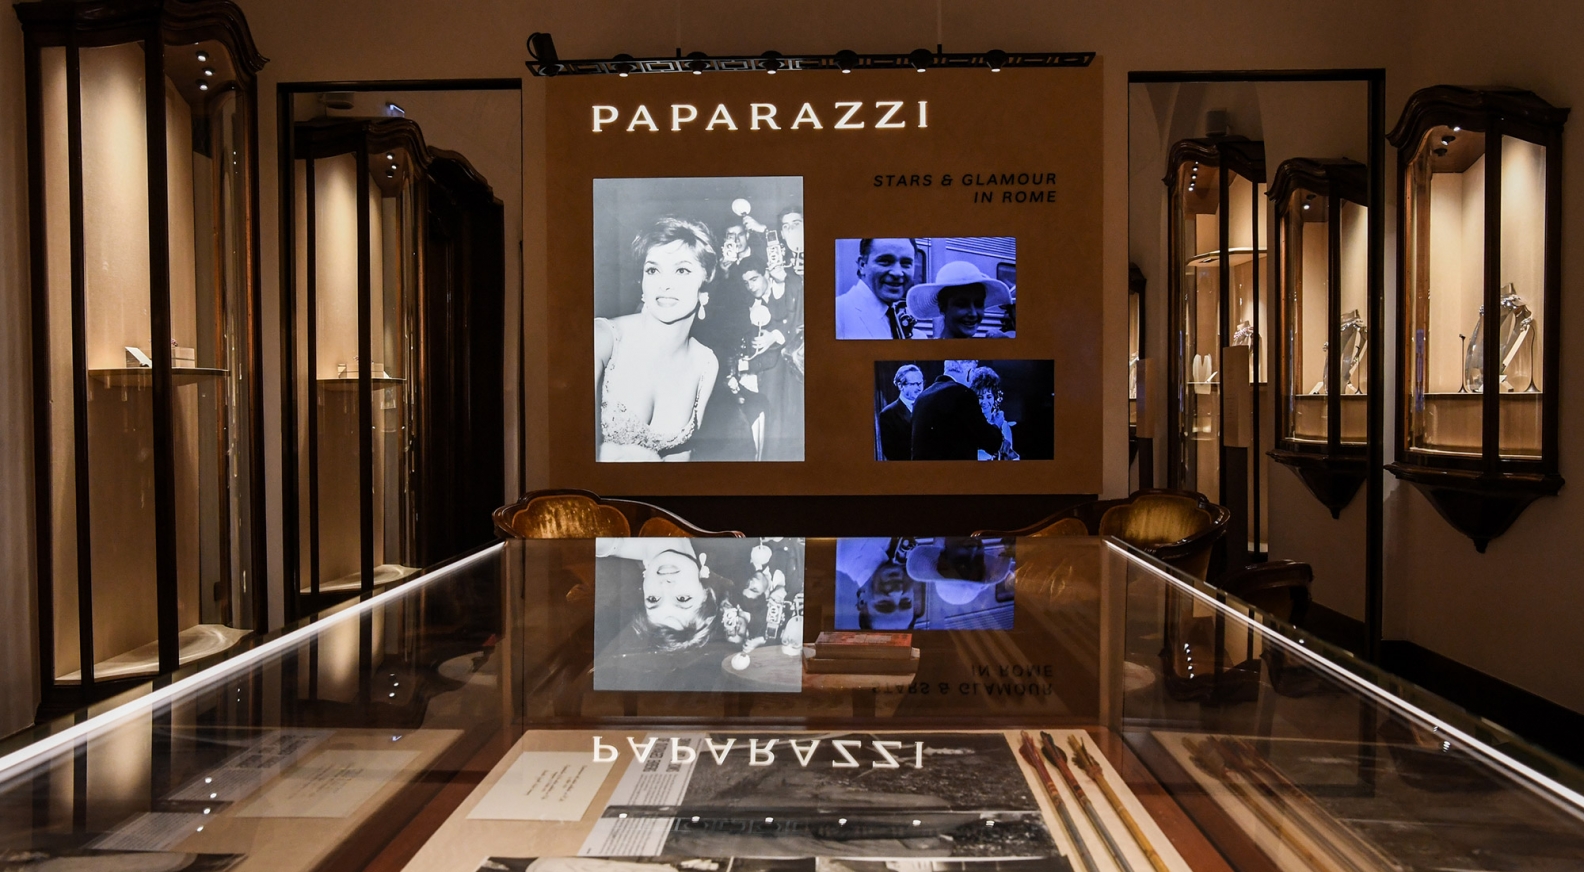 La Dolce Vita and paparazzis star in new Bulgari exhibition - LVMH